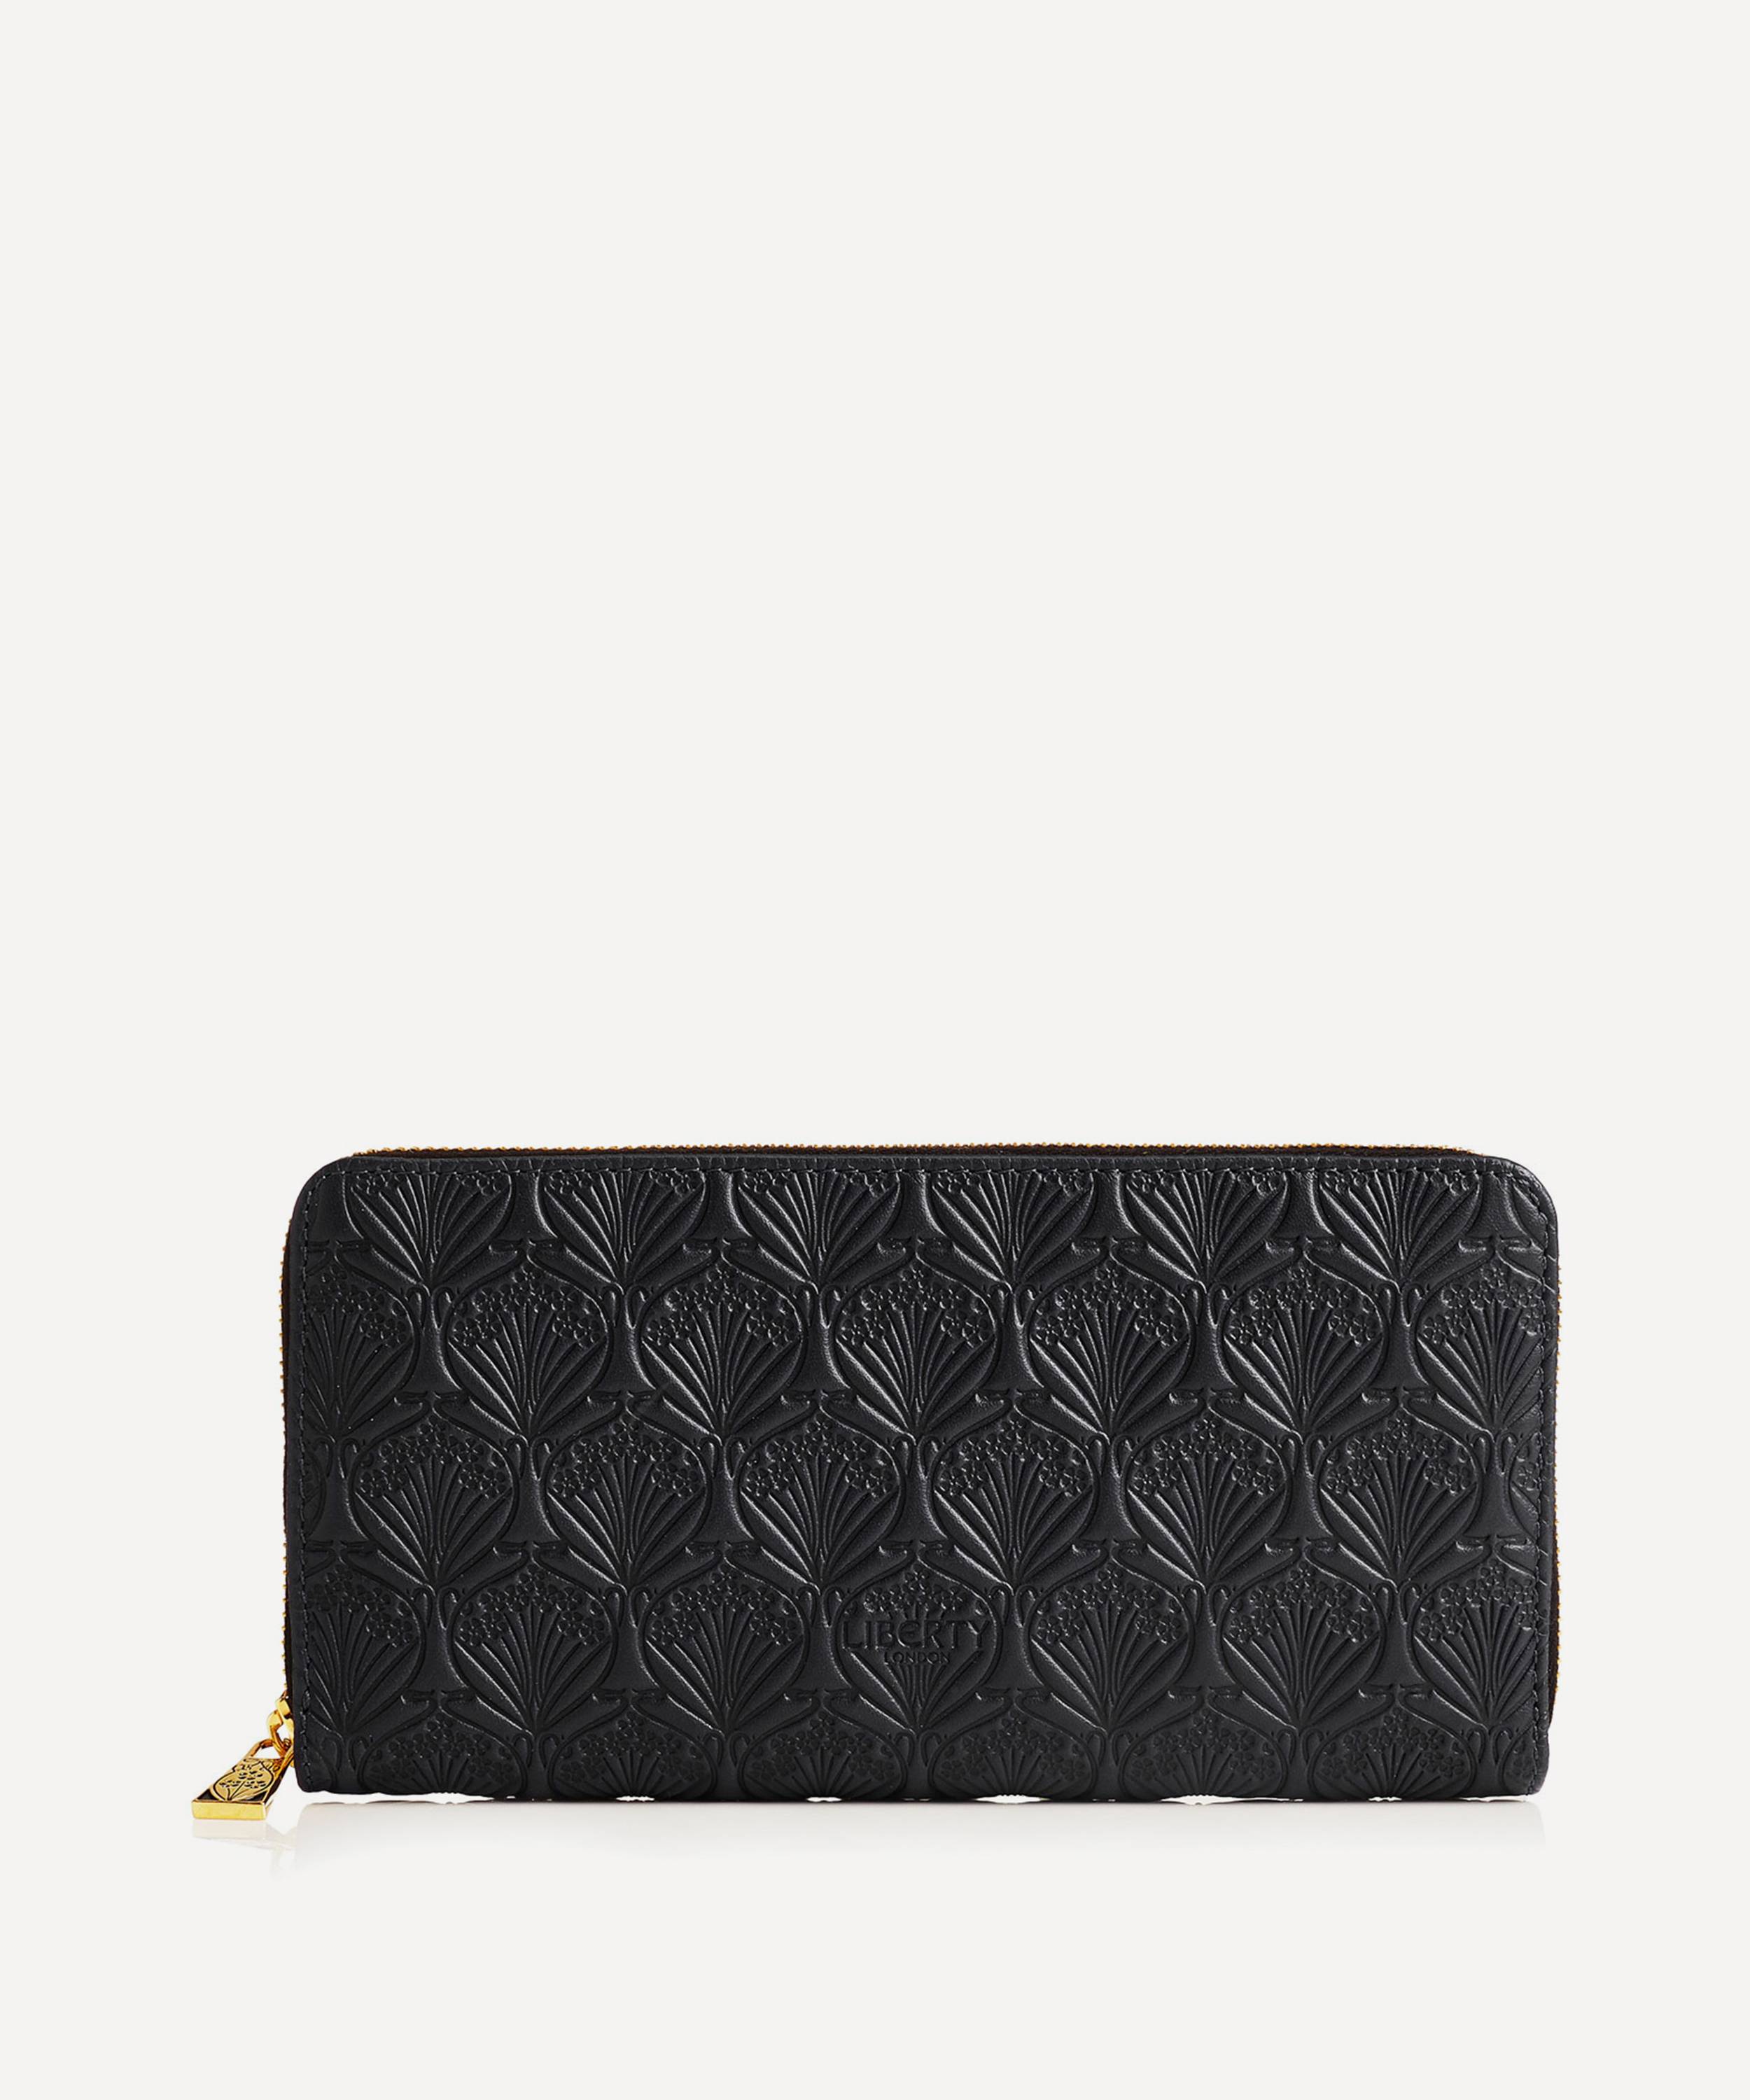 Authentic Louis Vuitton Large Black Zip Around Clutch Wallet